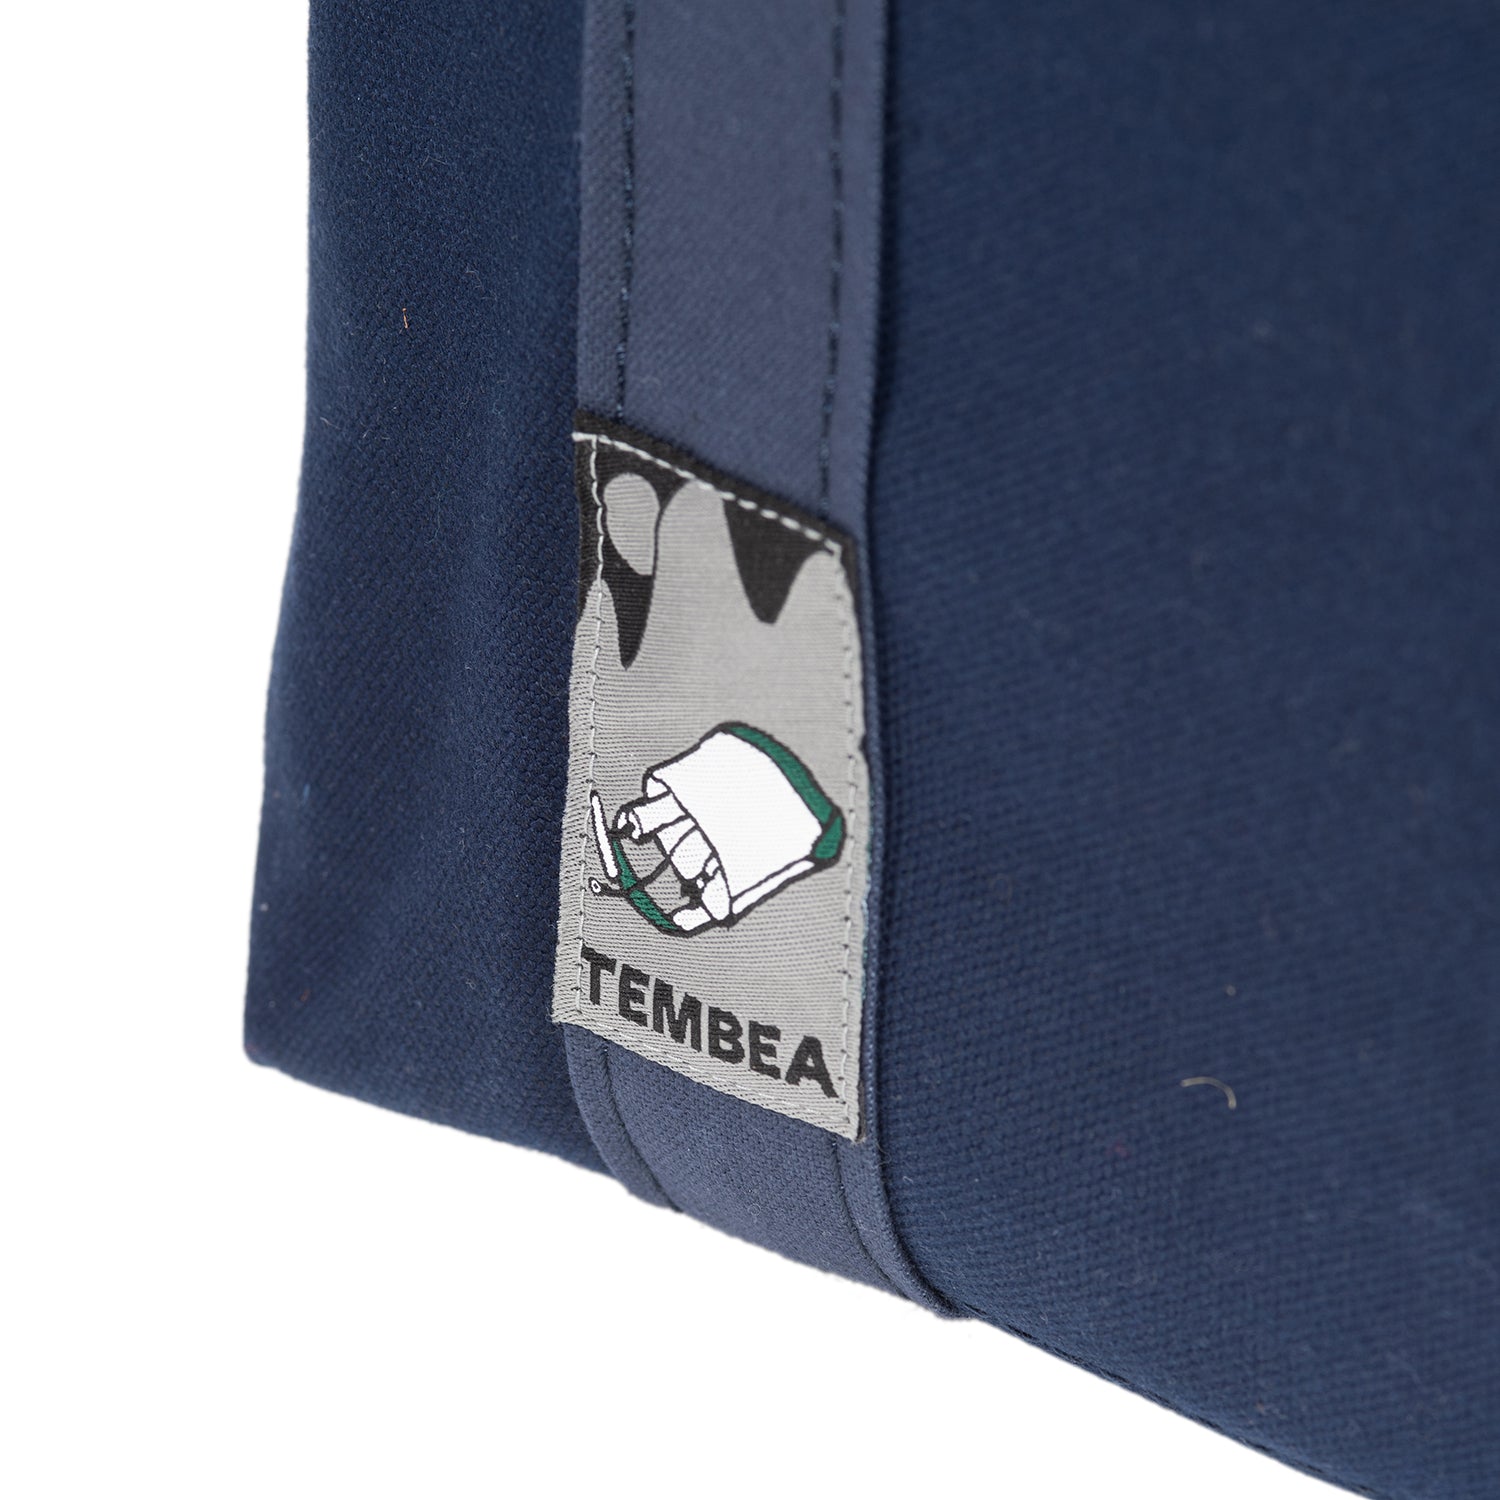 TEMBEA Zip Tote For 137